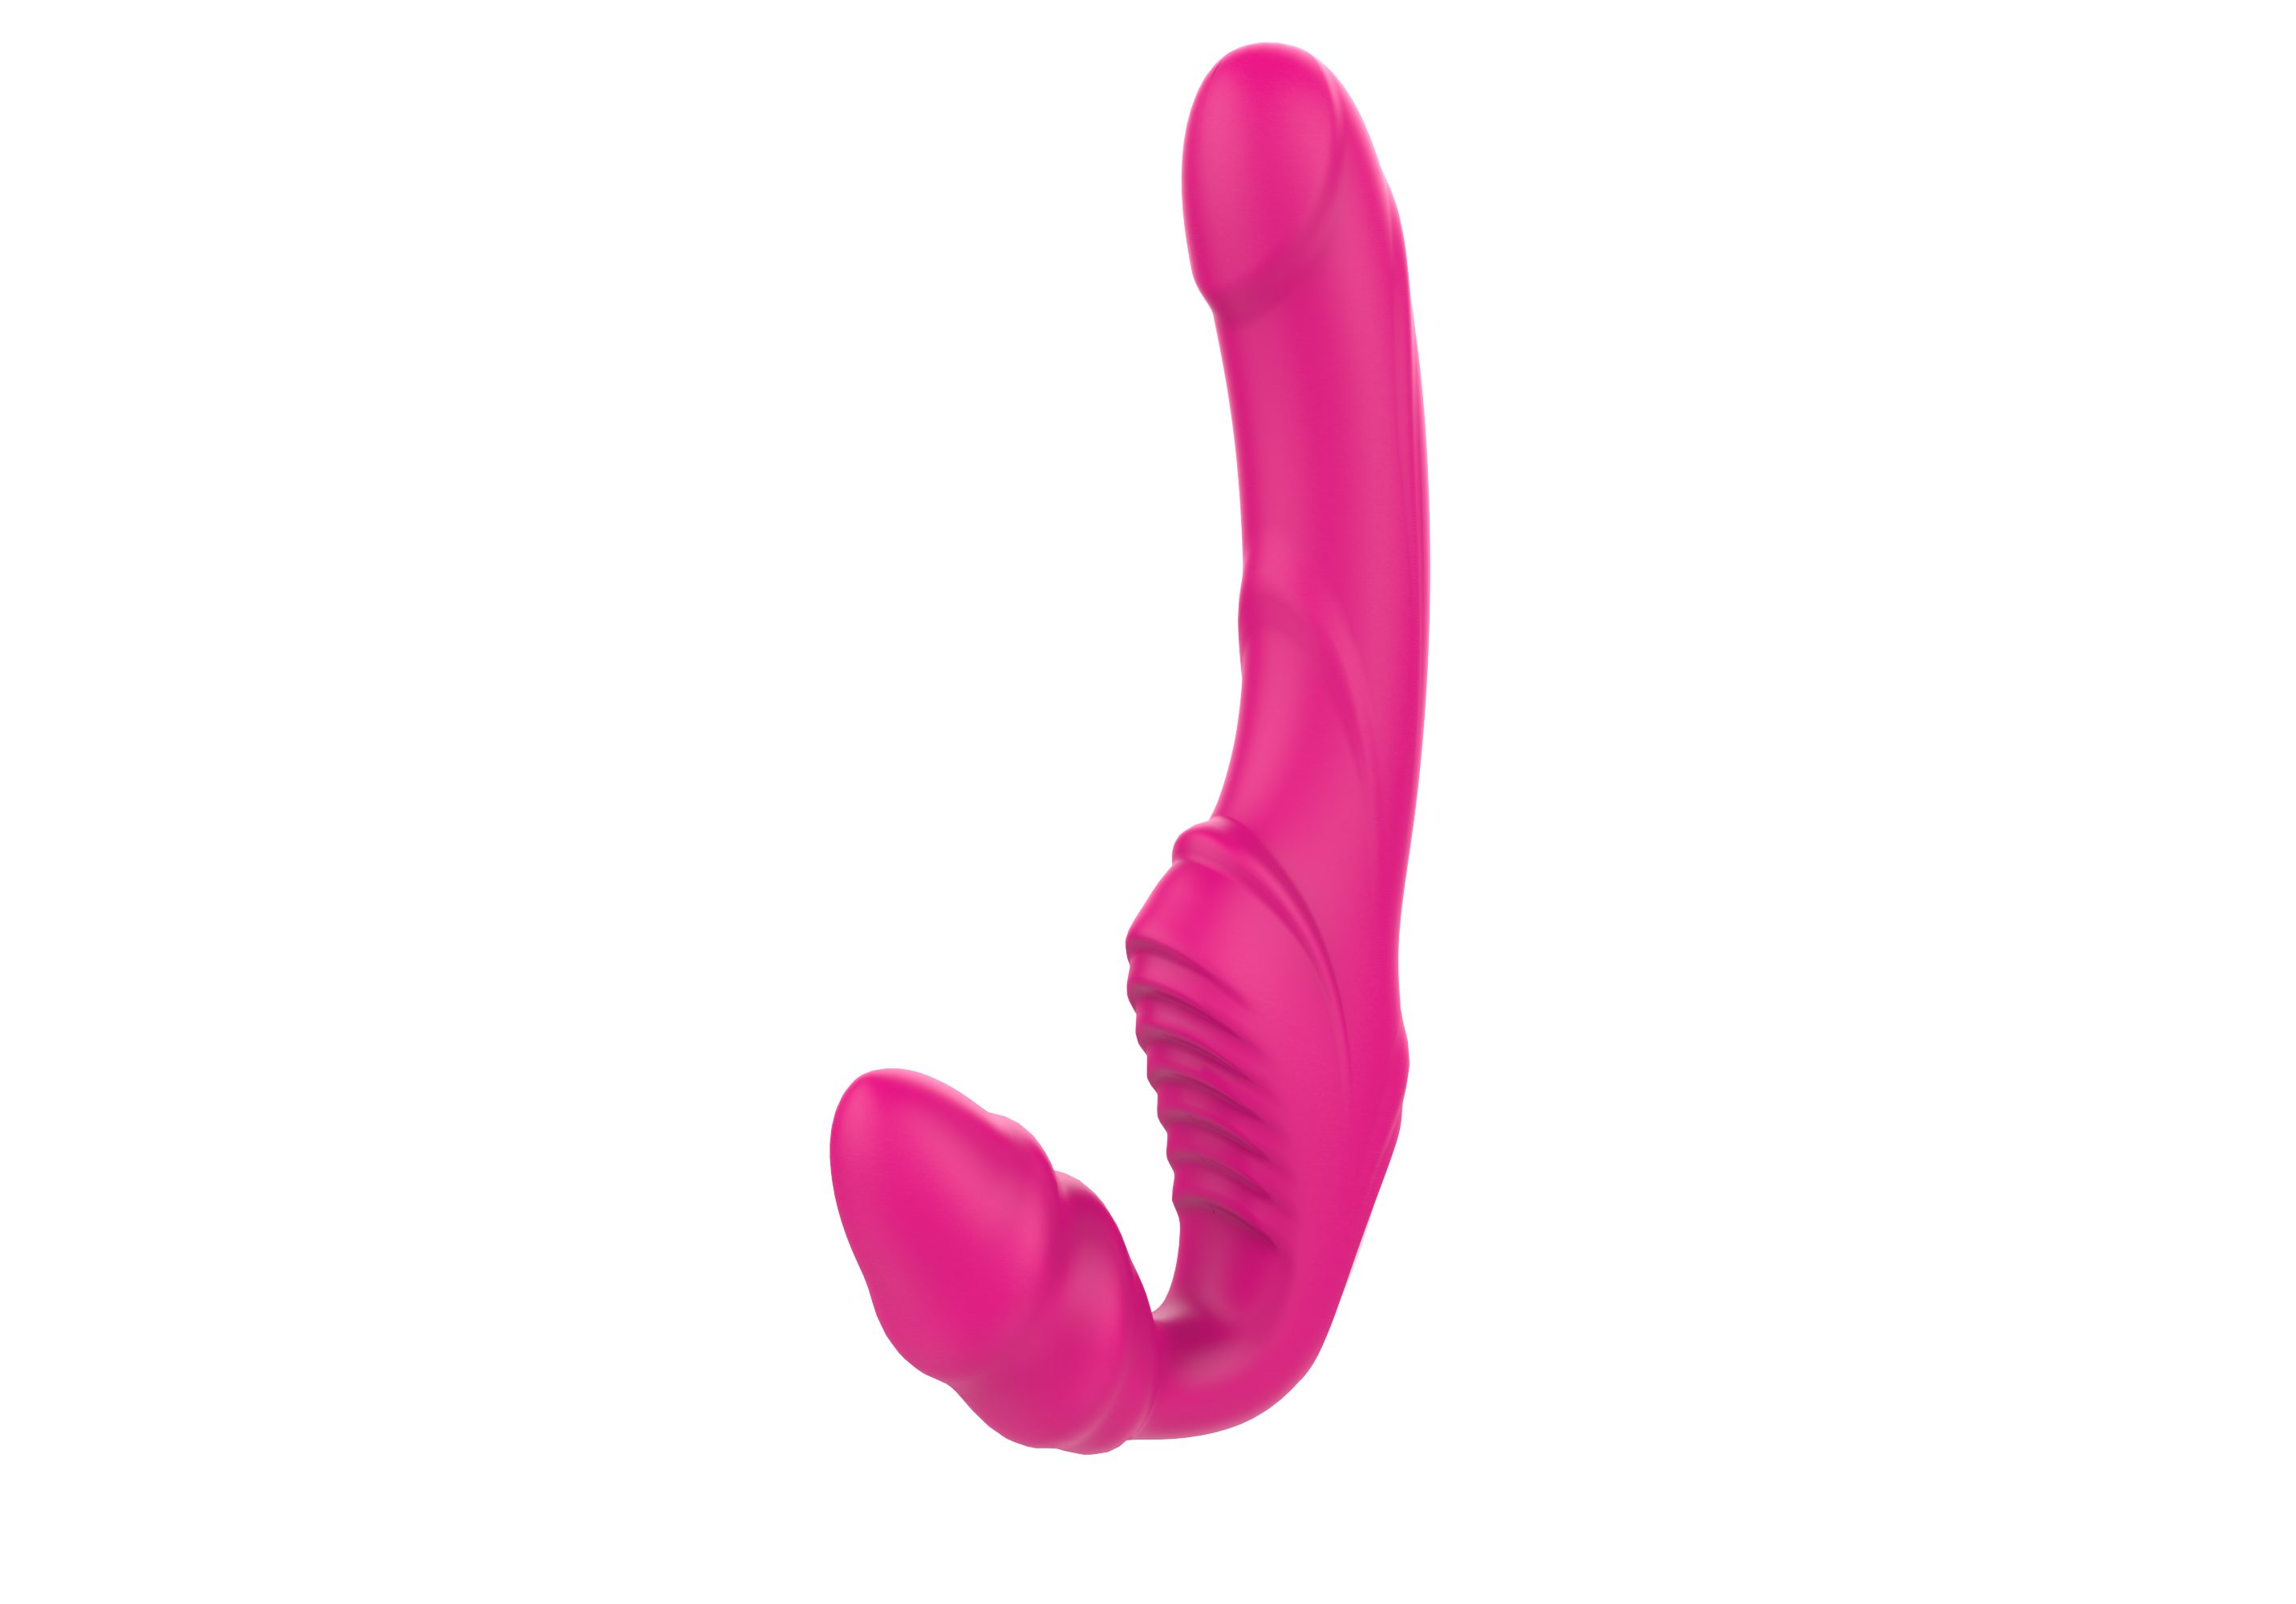 S-Hand Paar-Vibrator Vibrator Silikon Punkt (Packung) Stimulation 9 modi, Klitoris G